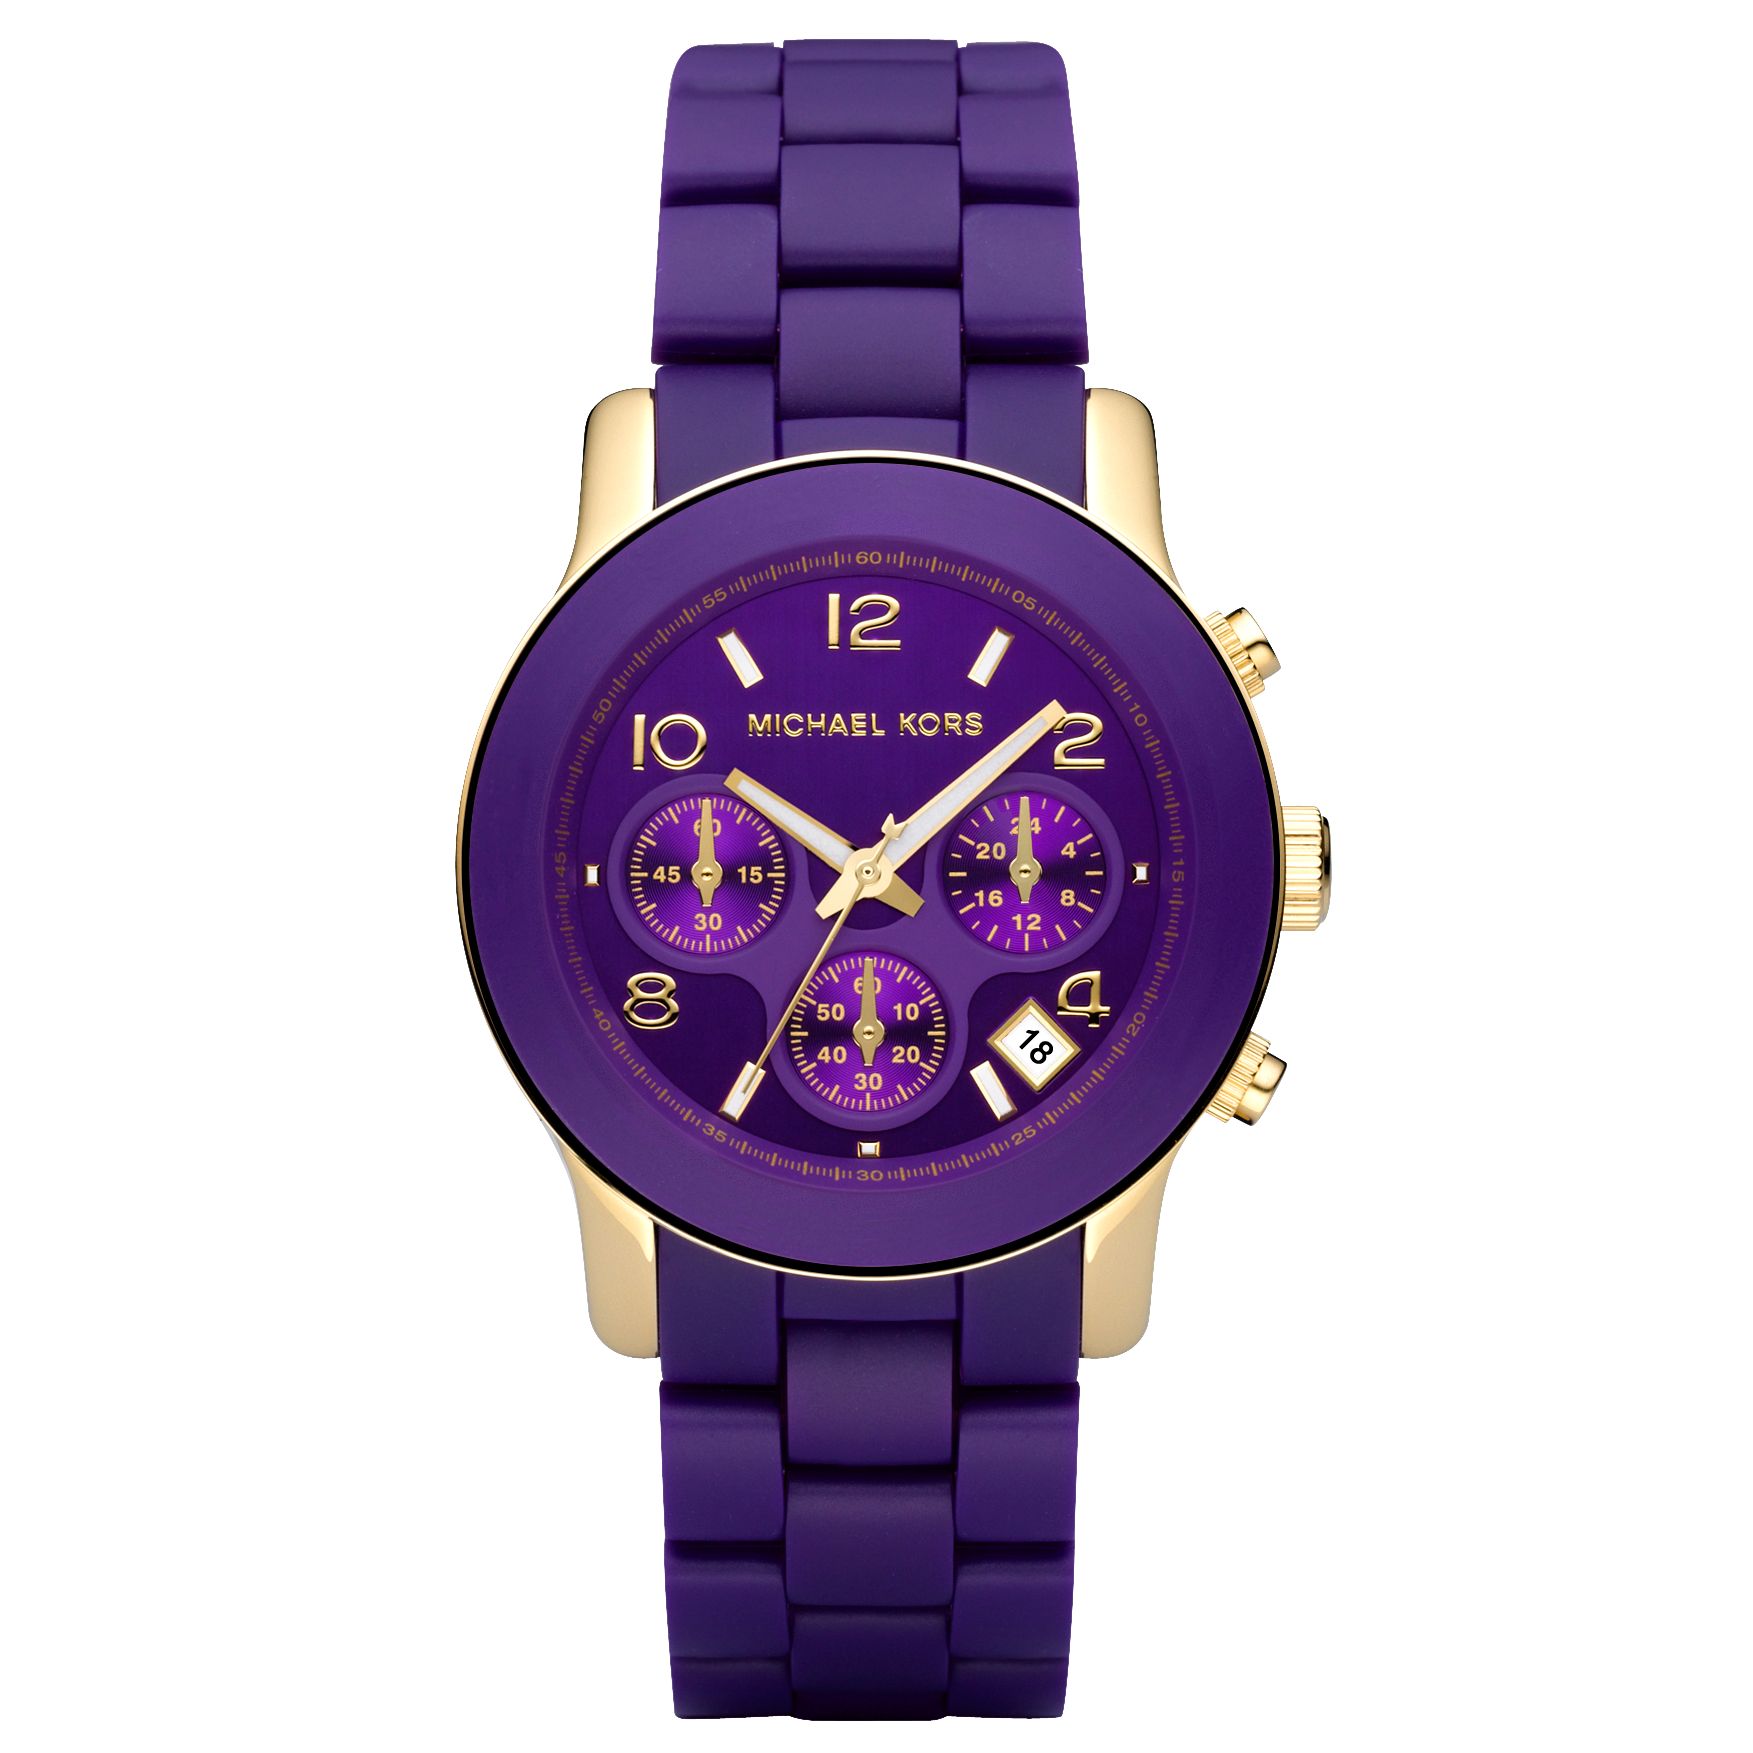 Michael Kors MK5316 Women's Purple Round Chronograph Bracelet Watch at John Lewis